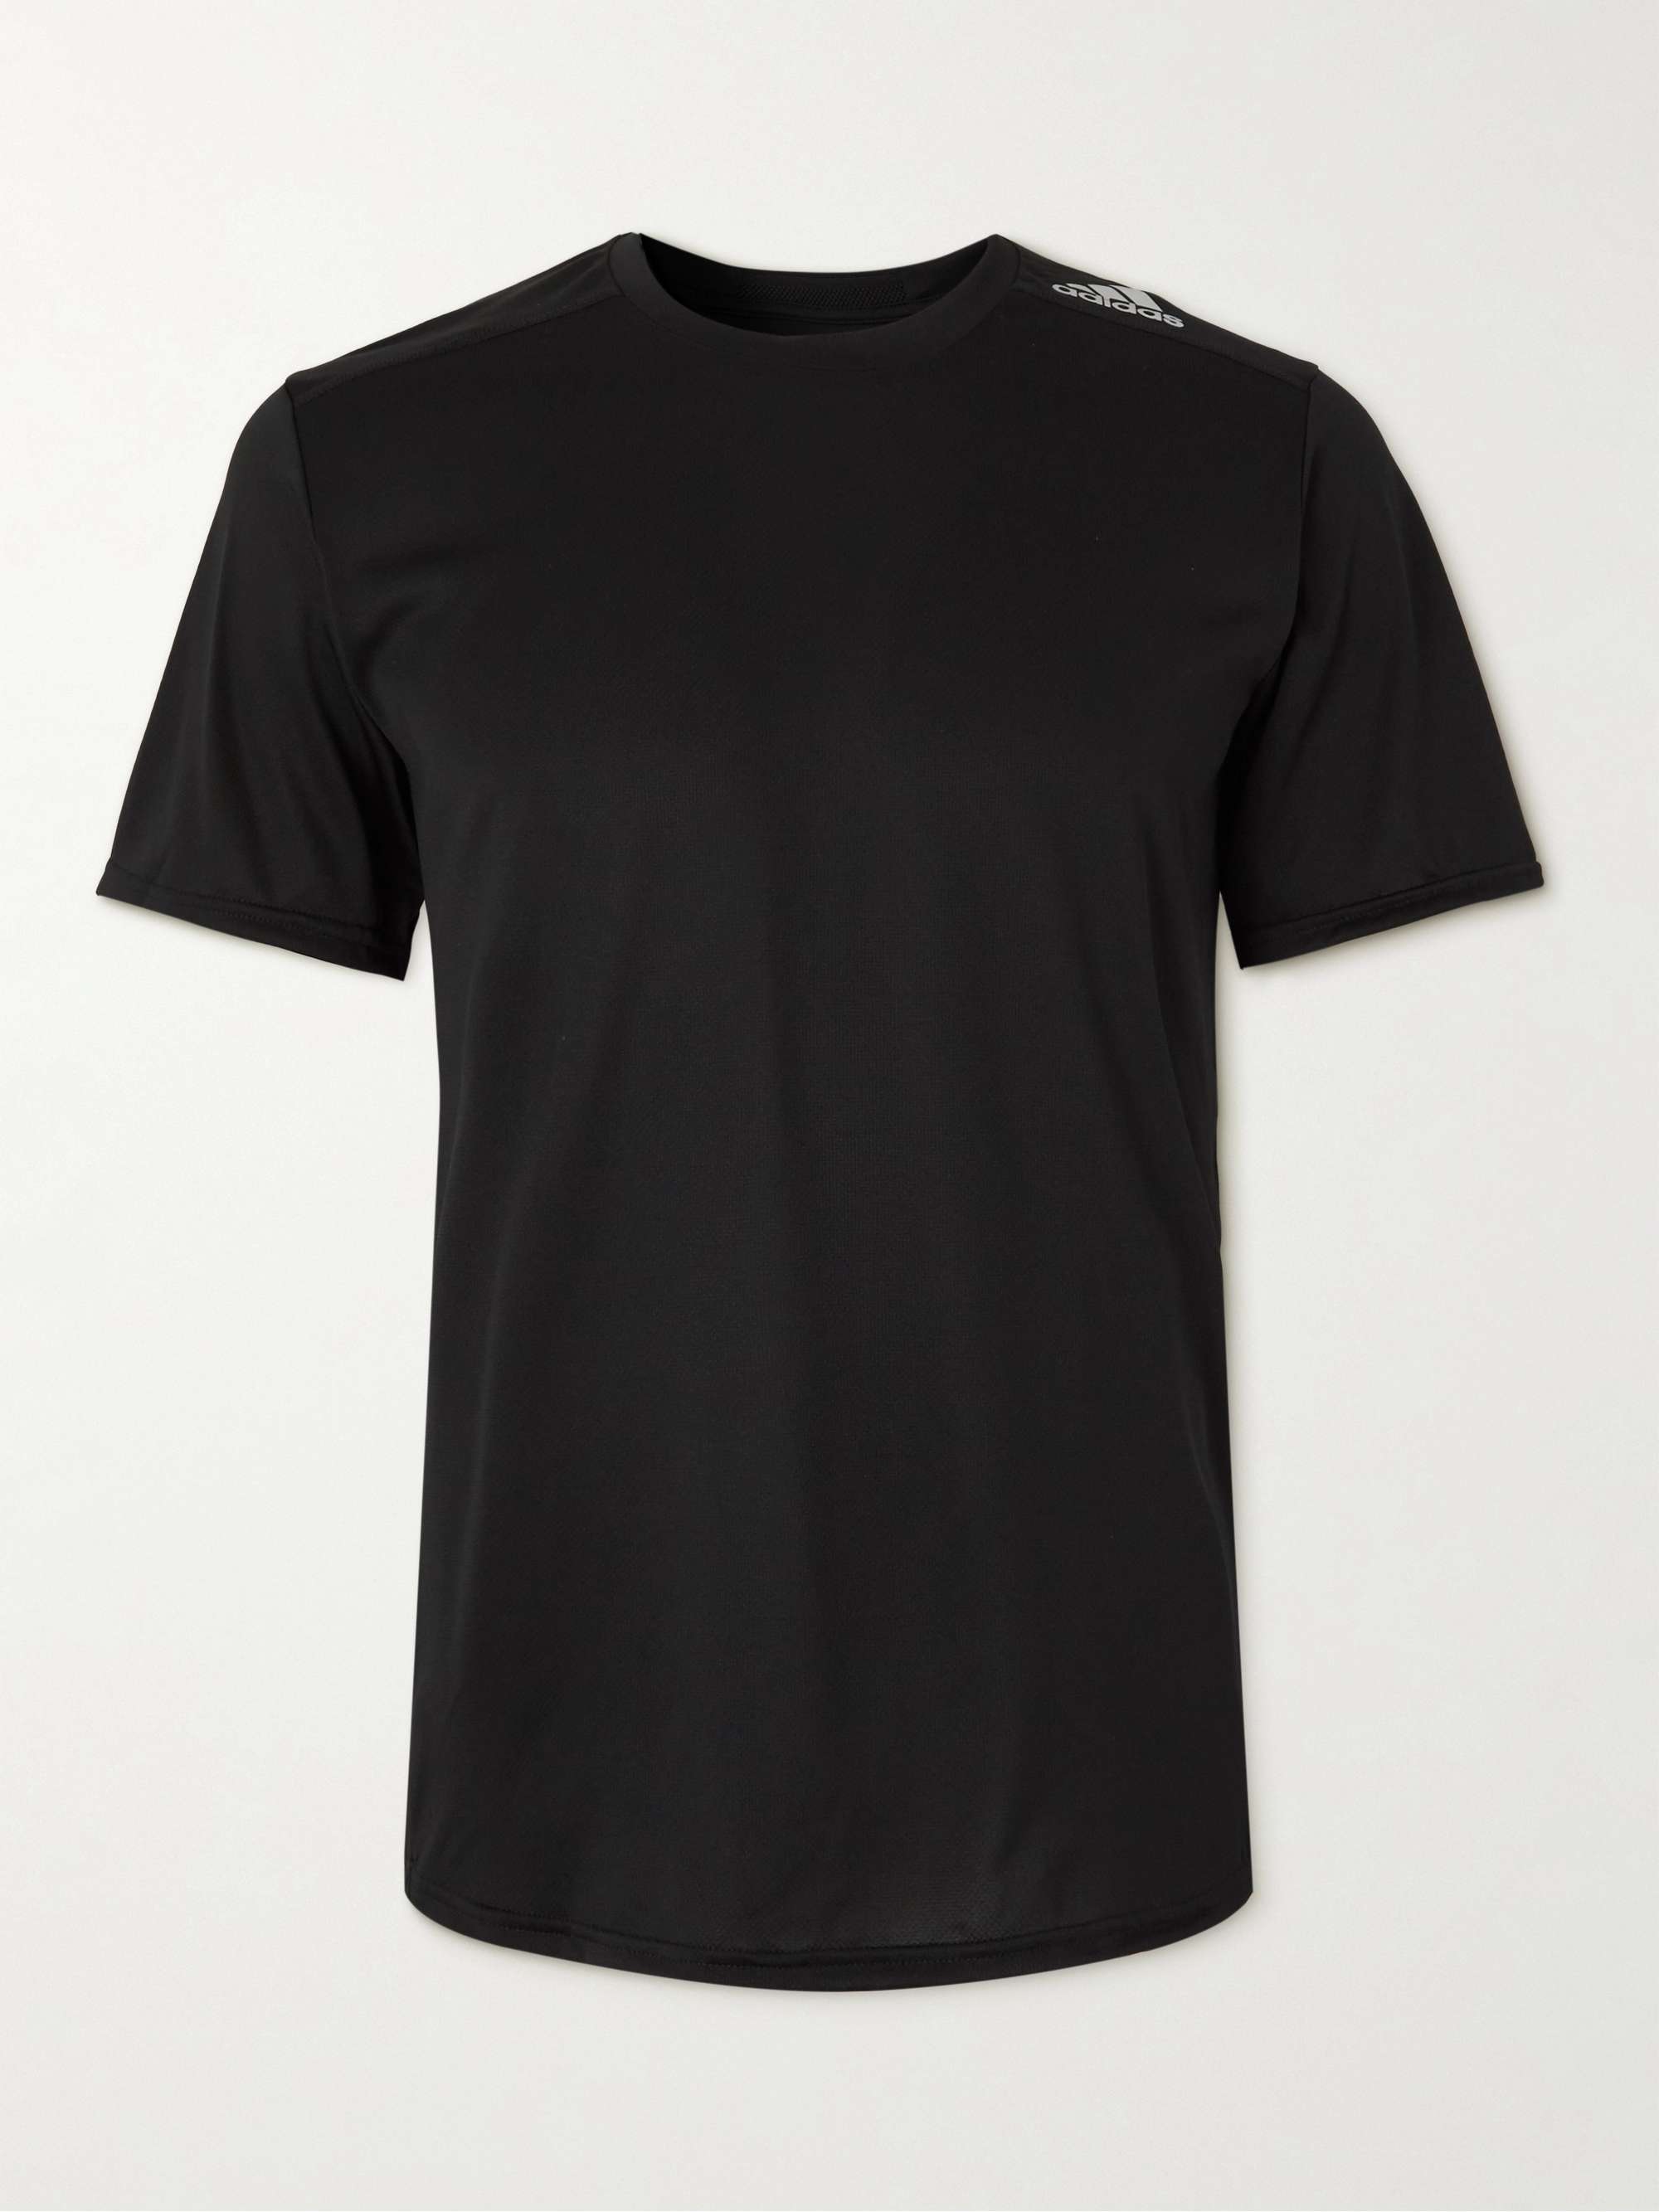 ADIDAS SPORT Designed 4 Running Recycled AEROREADY T-Shirt